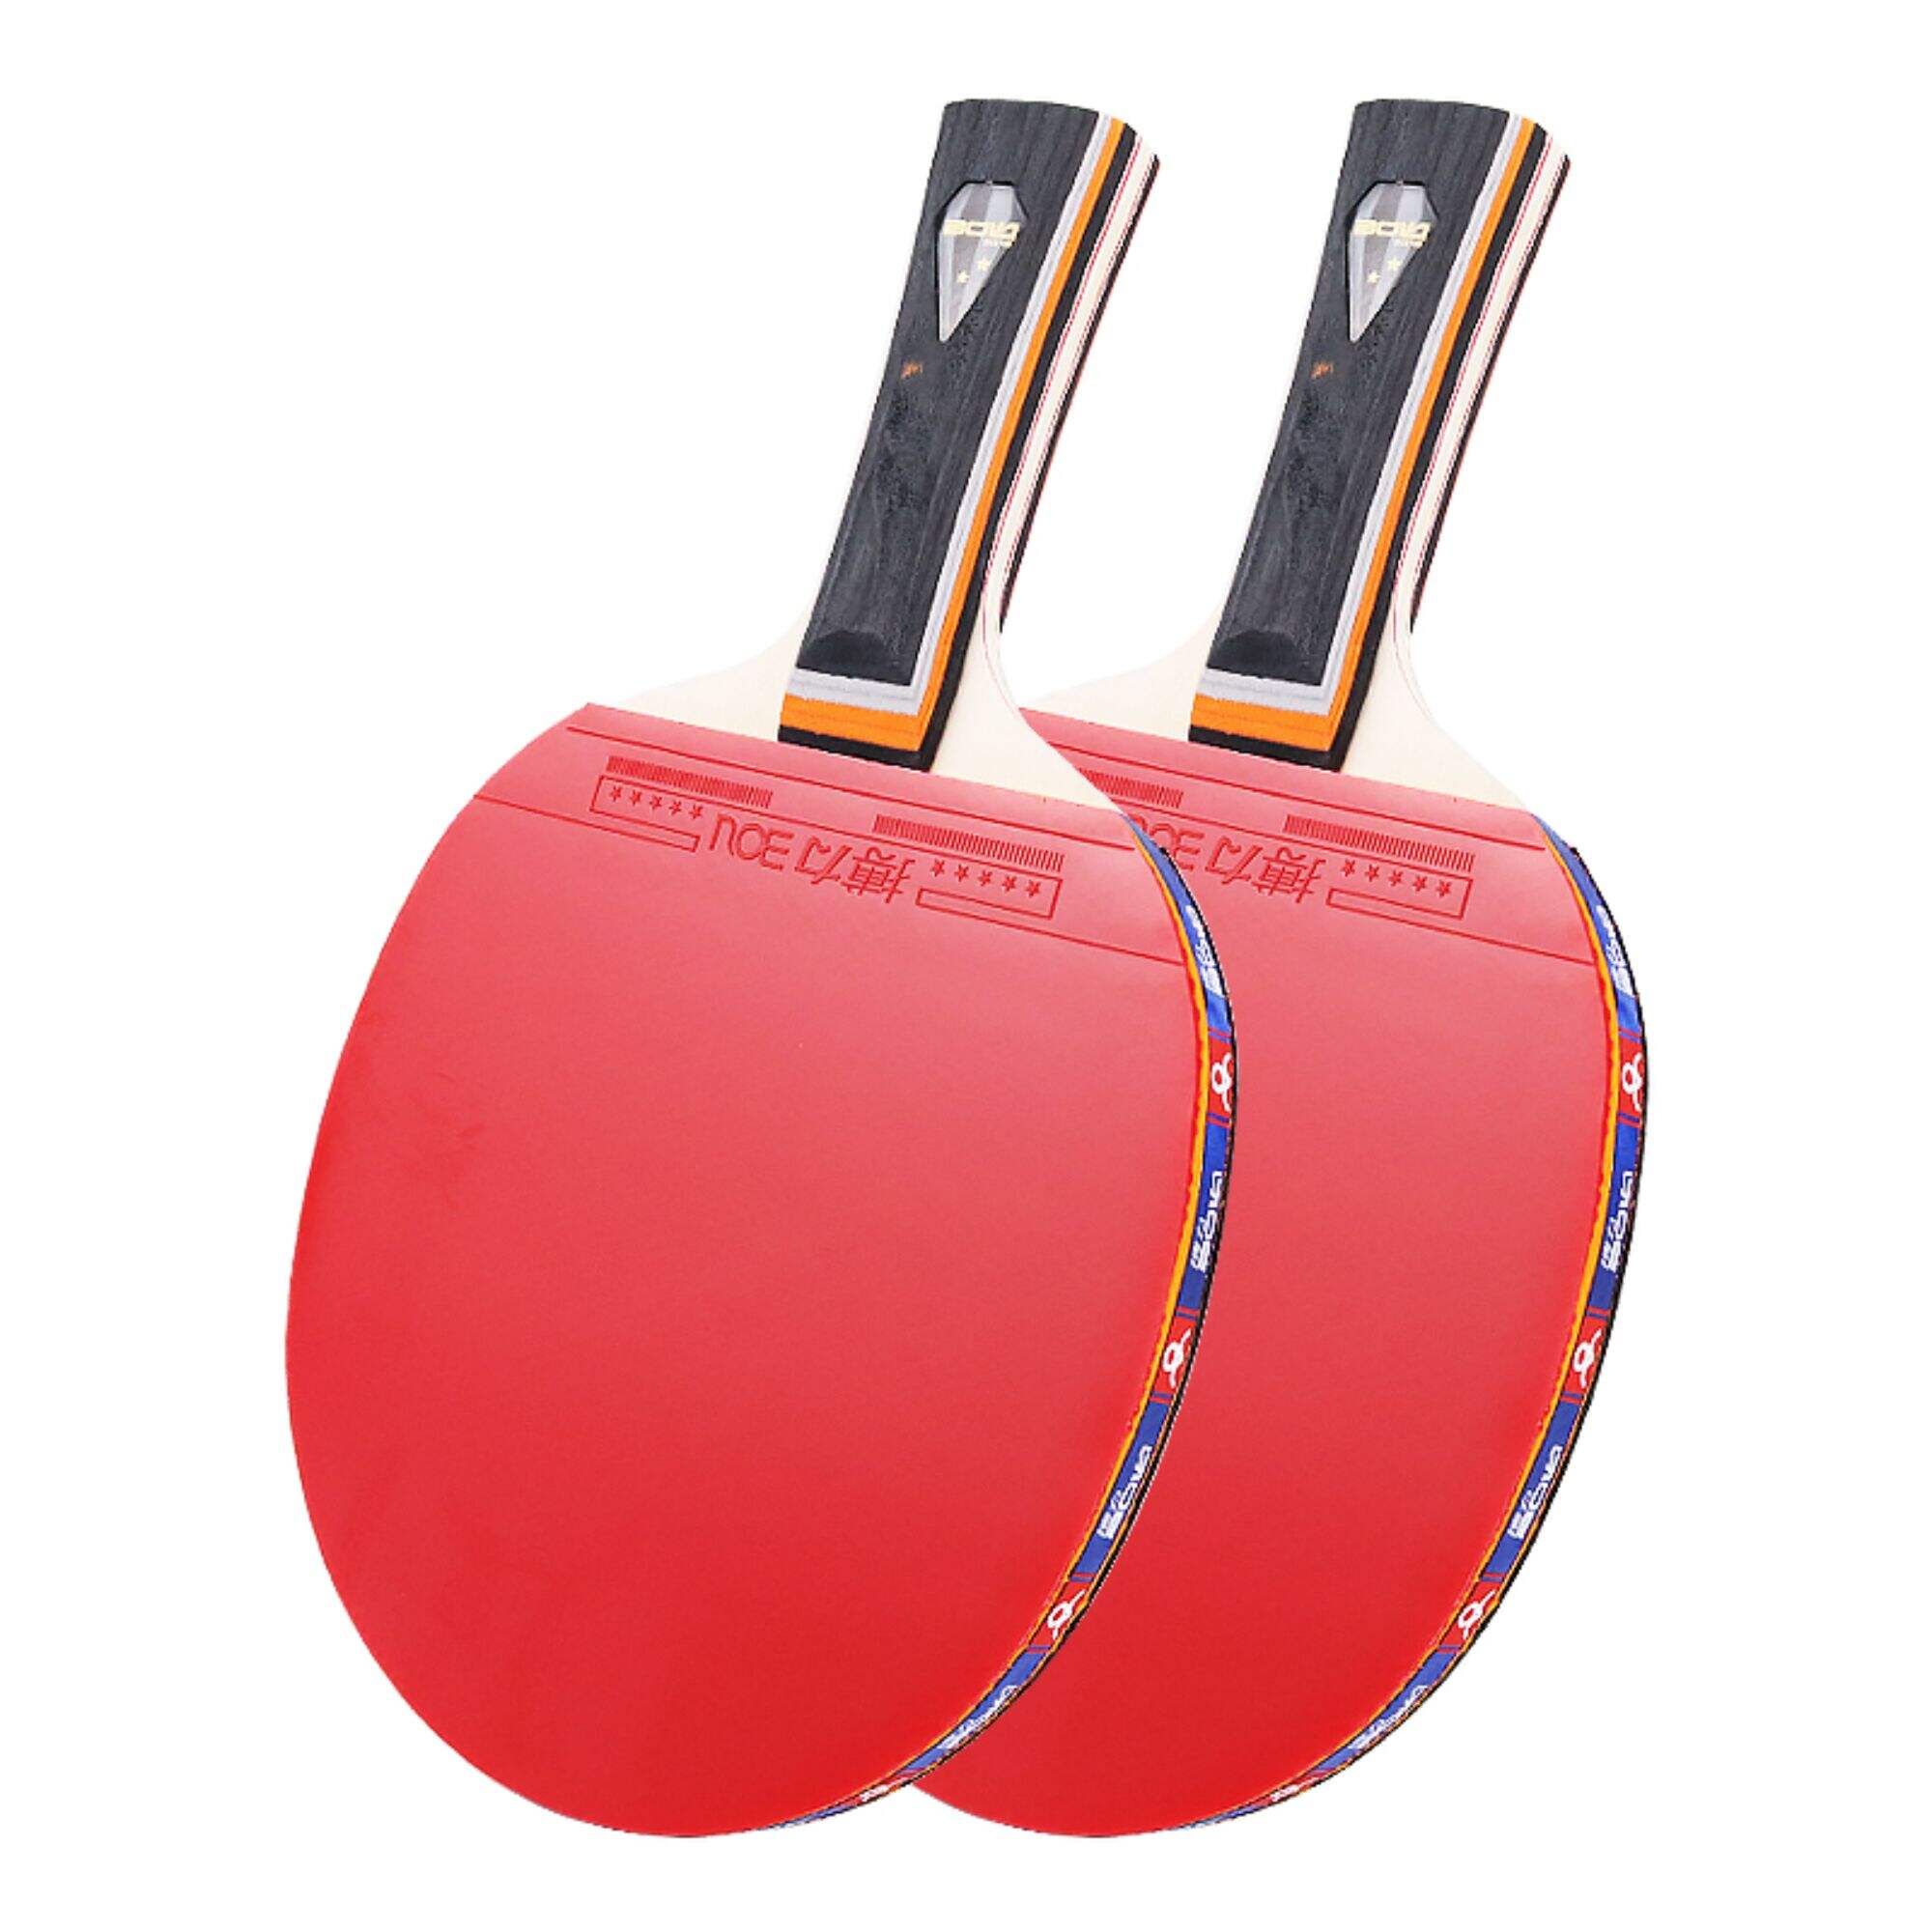 Boli 2star Professional Table Tennis Rakcet/Bat/Paddle